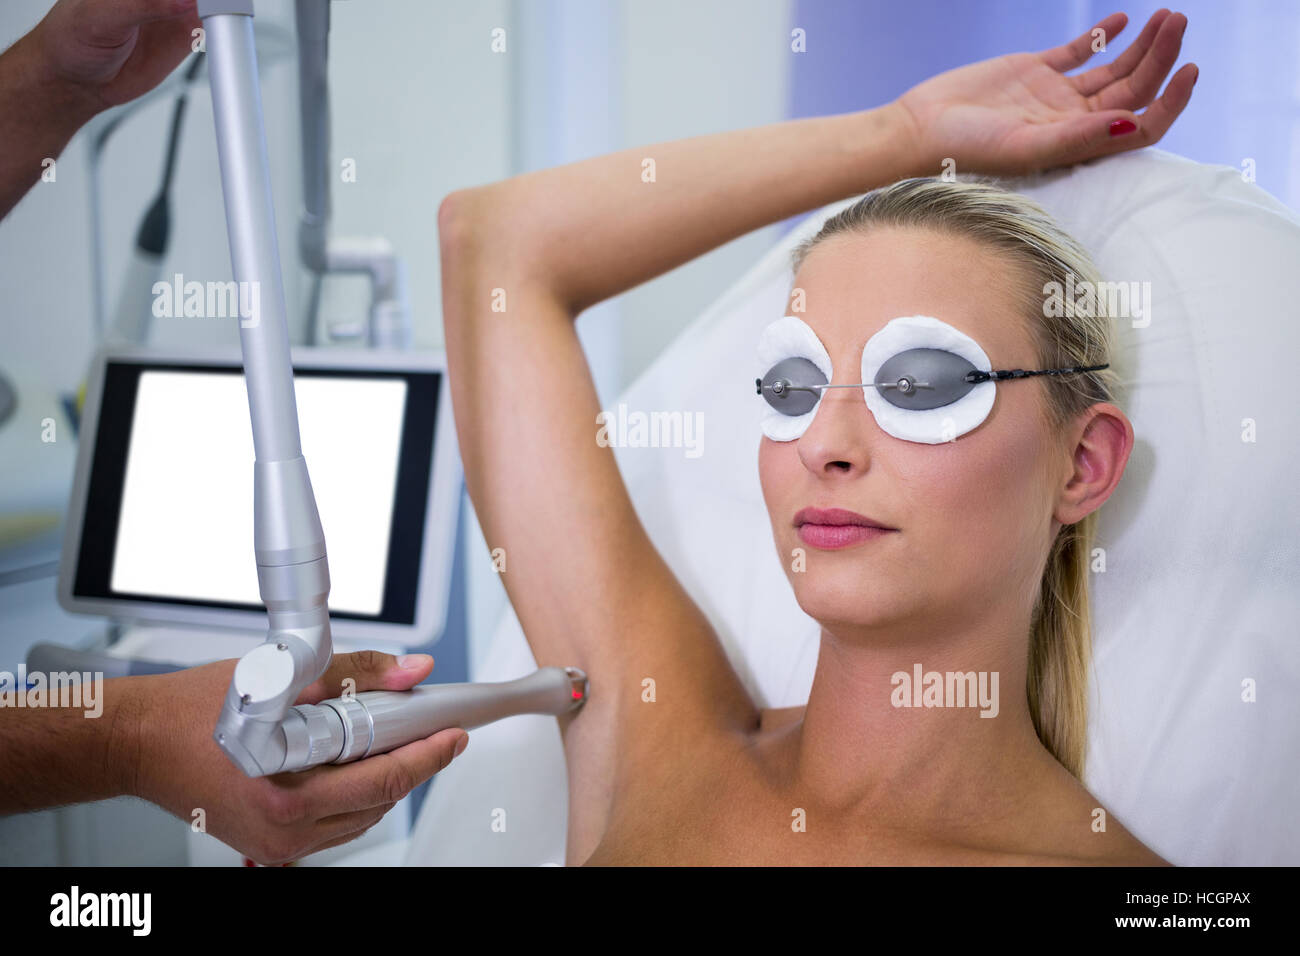 Dermatologist removing hair of patient armpit Stock Photo